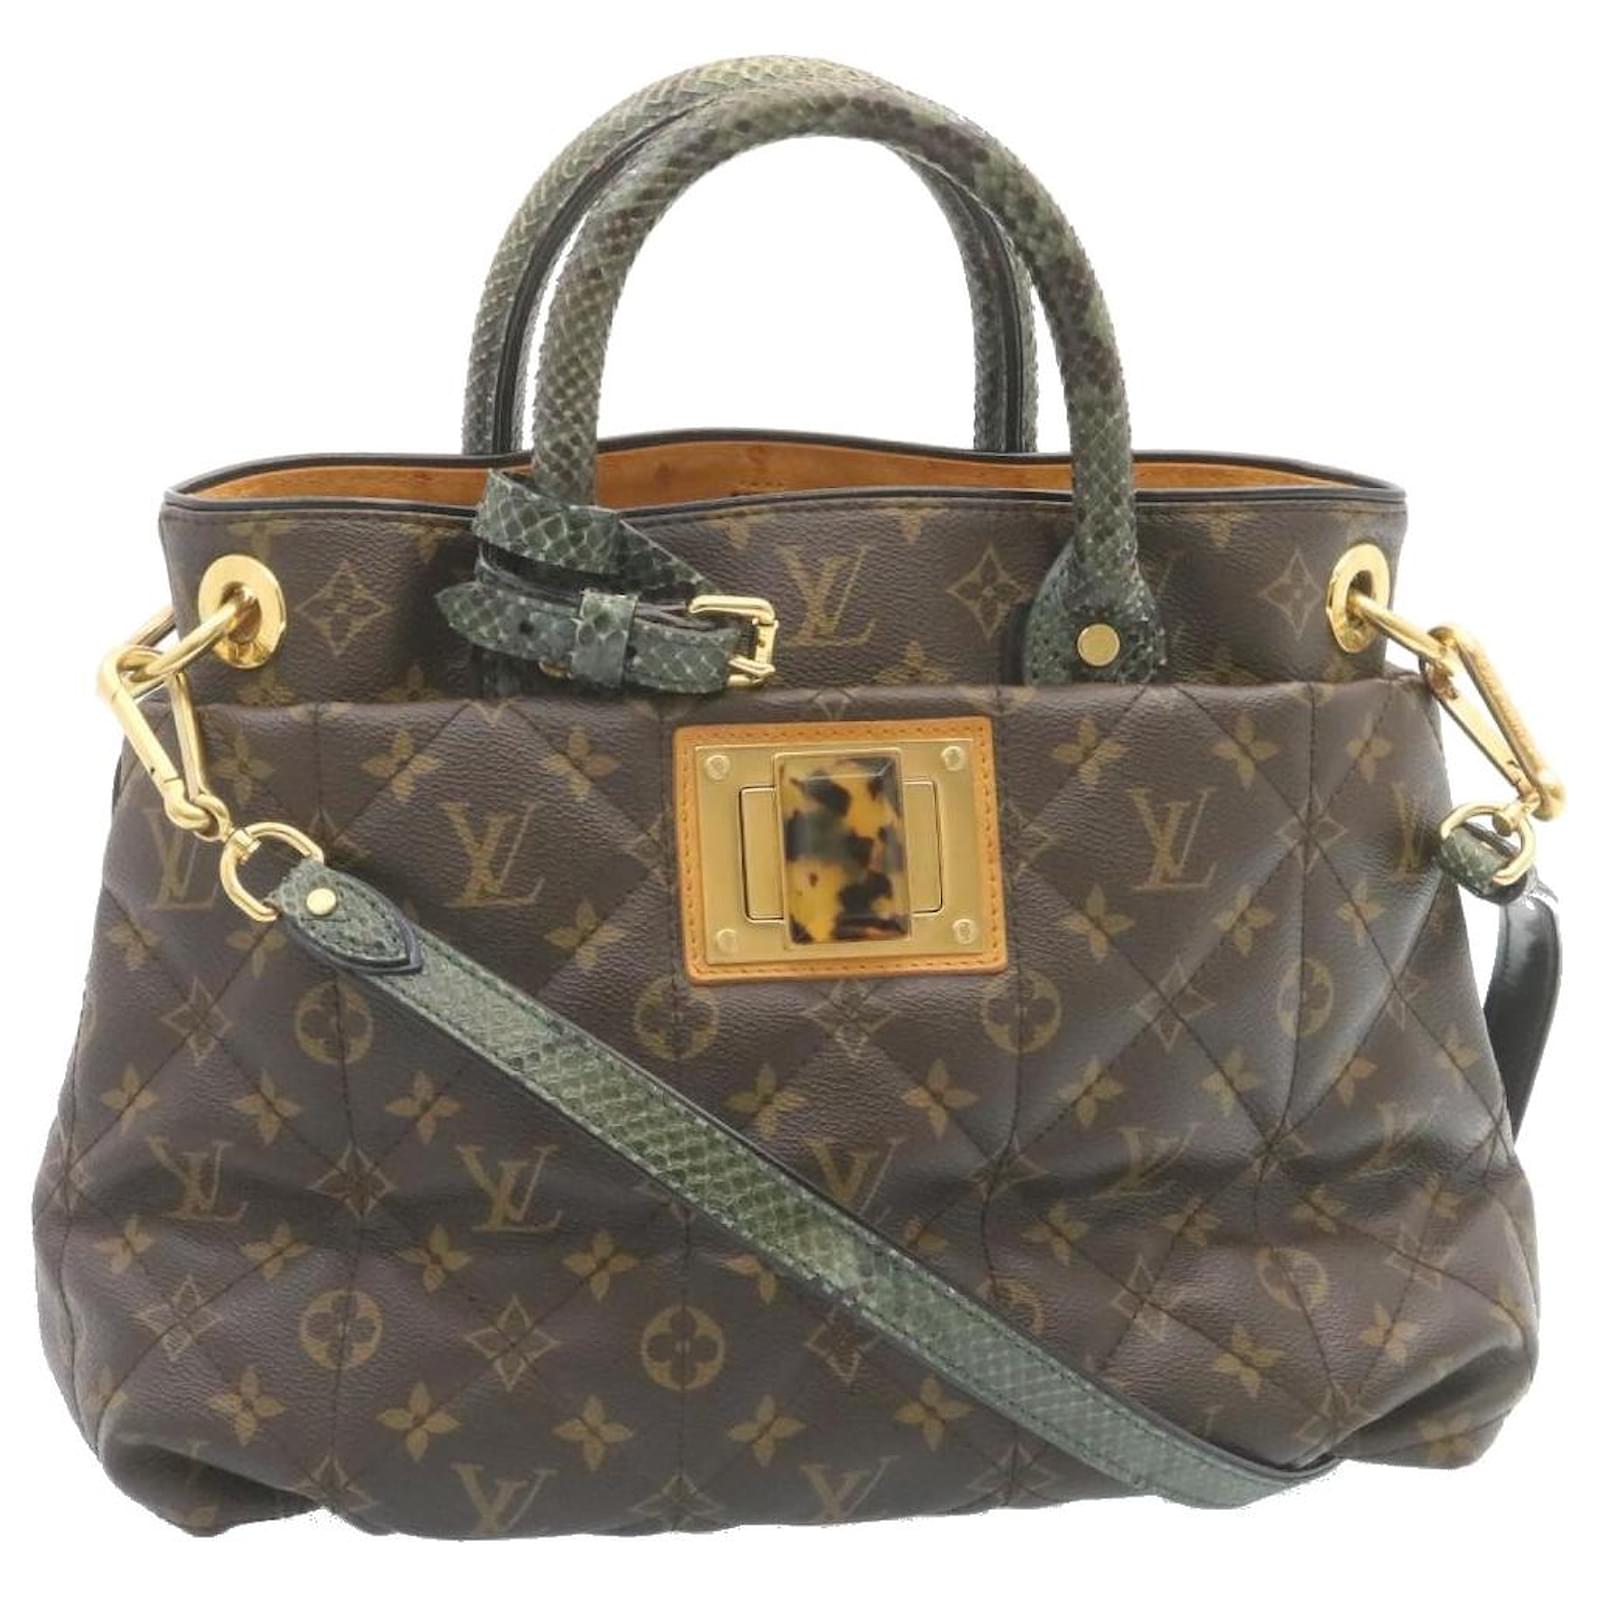 ❤️Sold❤️Authentic Louis Vuitton: Etoile GM Bag